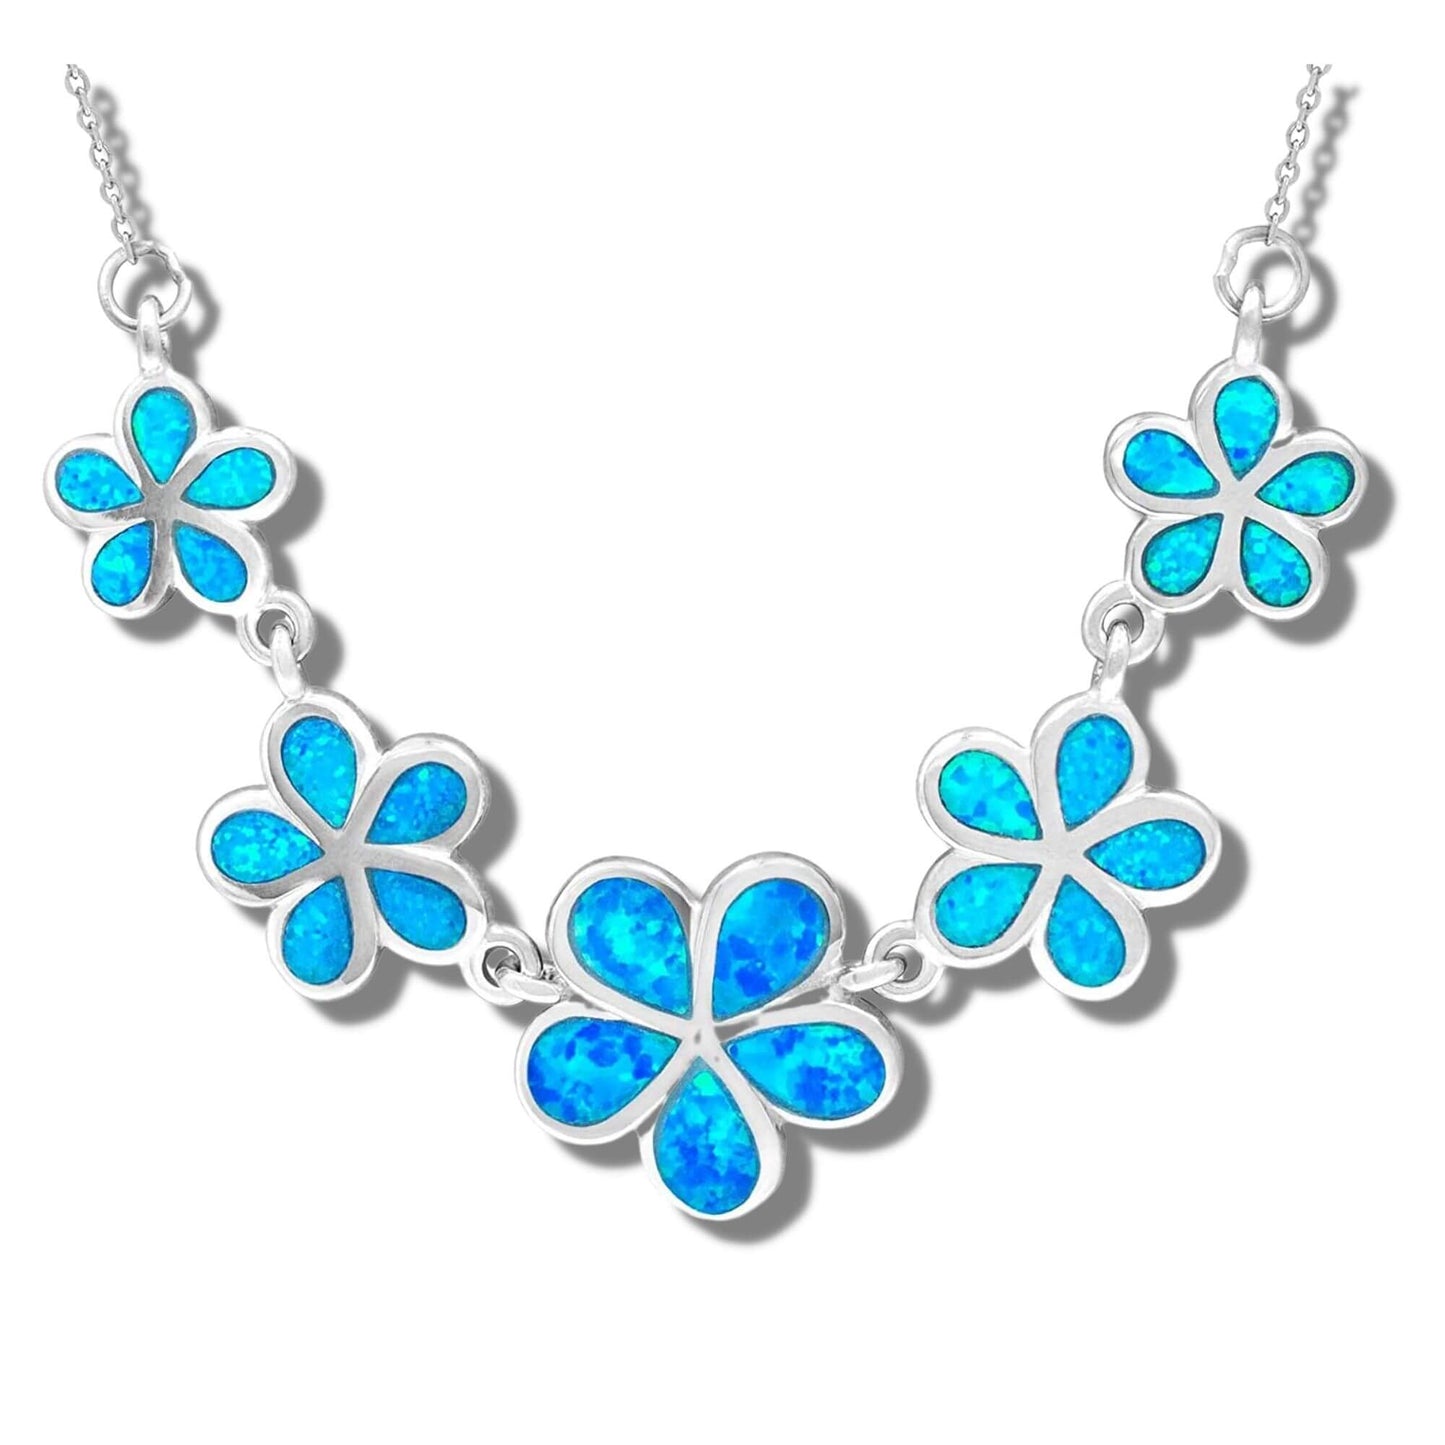 Forever Bloom Necklace